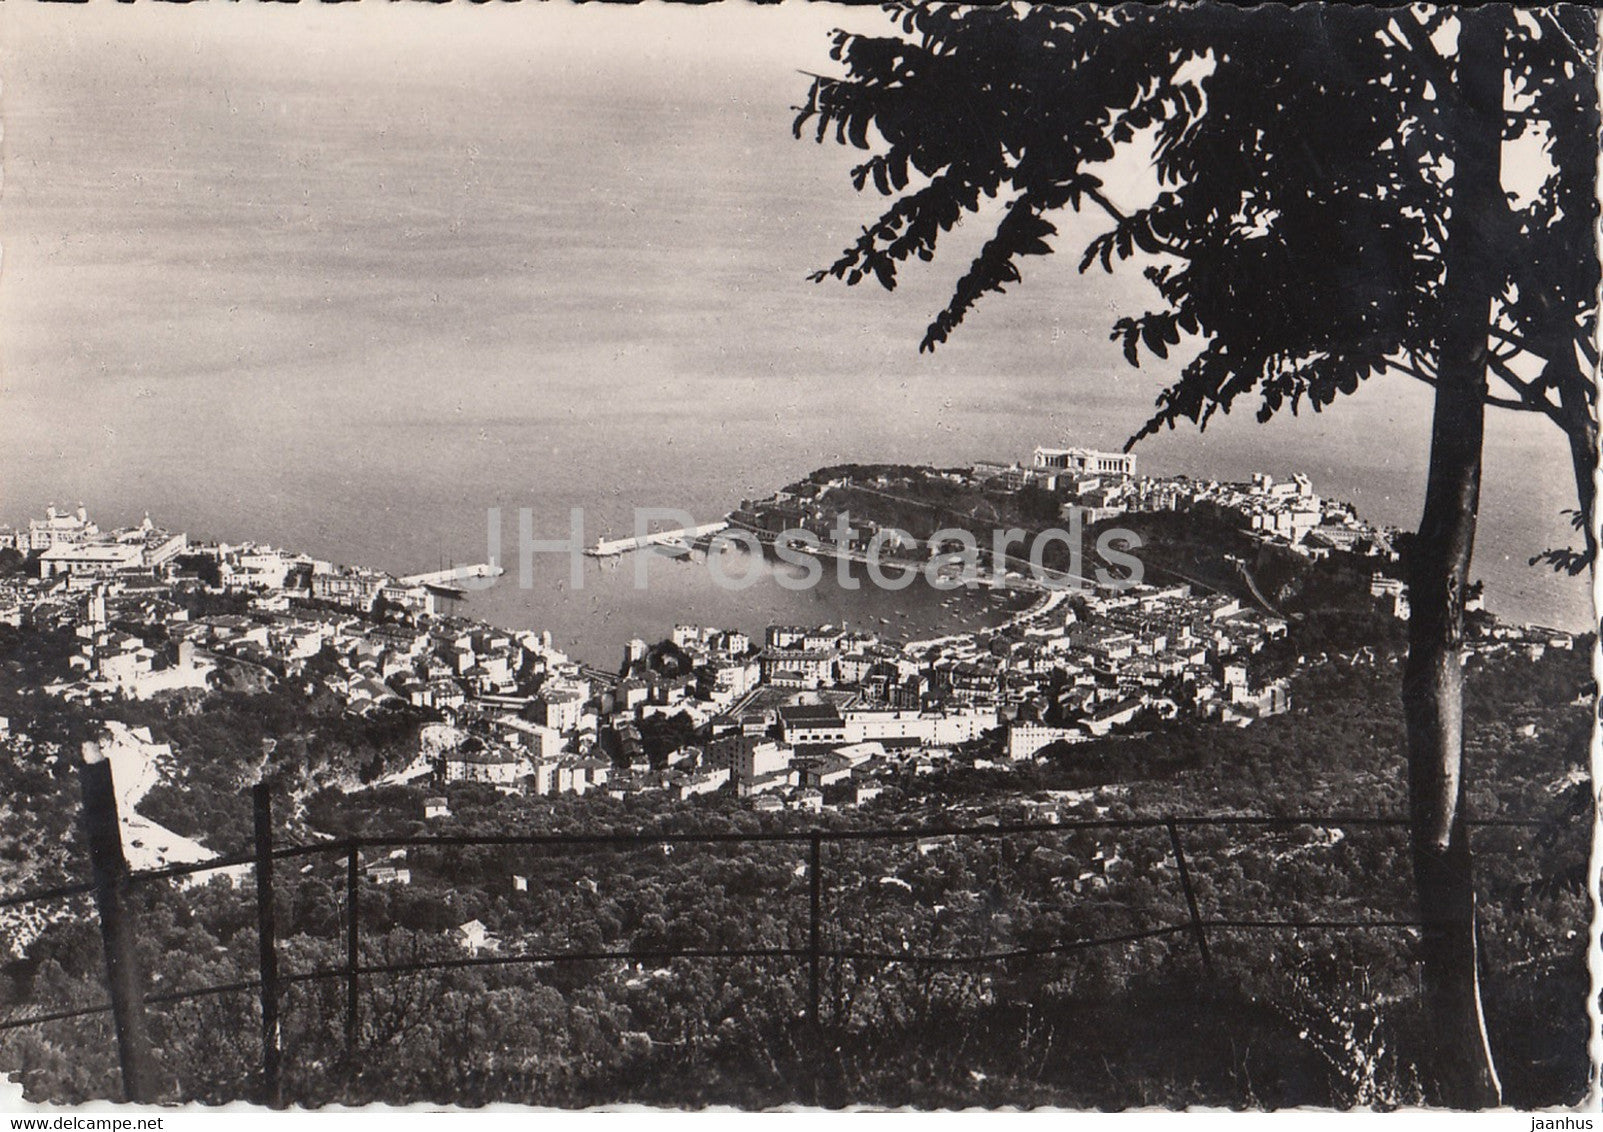 Monte Carlo - Vue prise de la Turbie - 211 - old postcard - 1953 - Monaco - used - JH Postcards